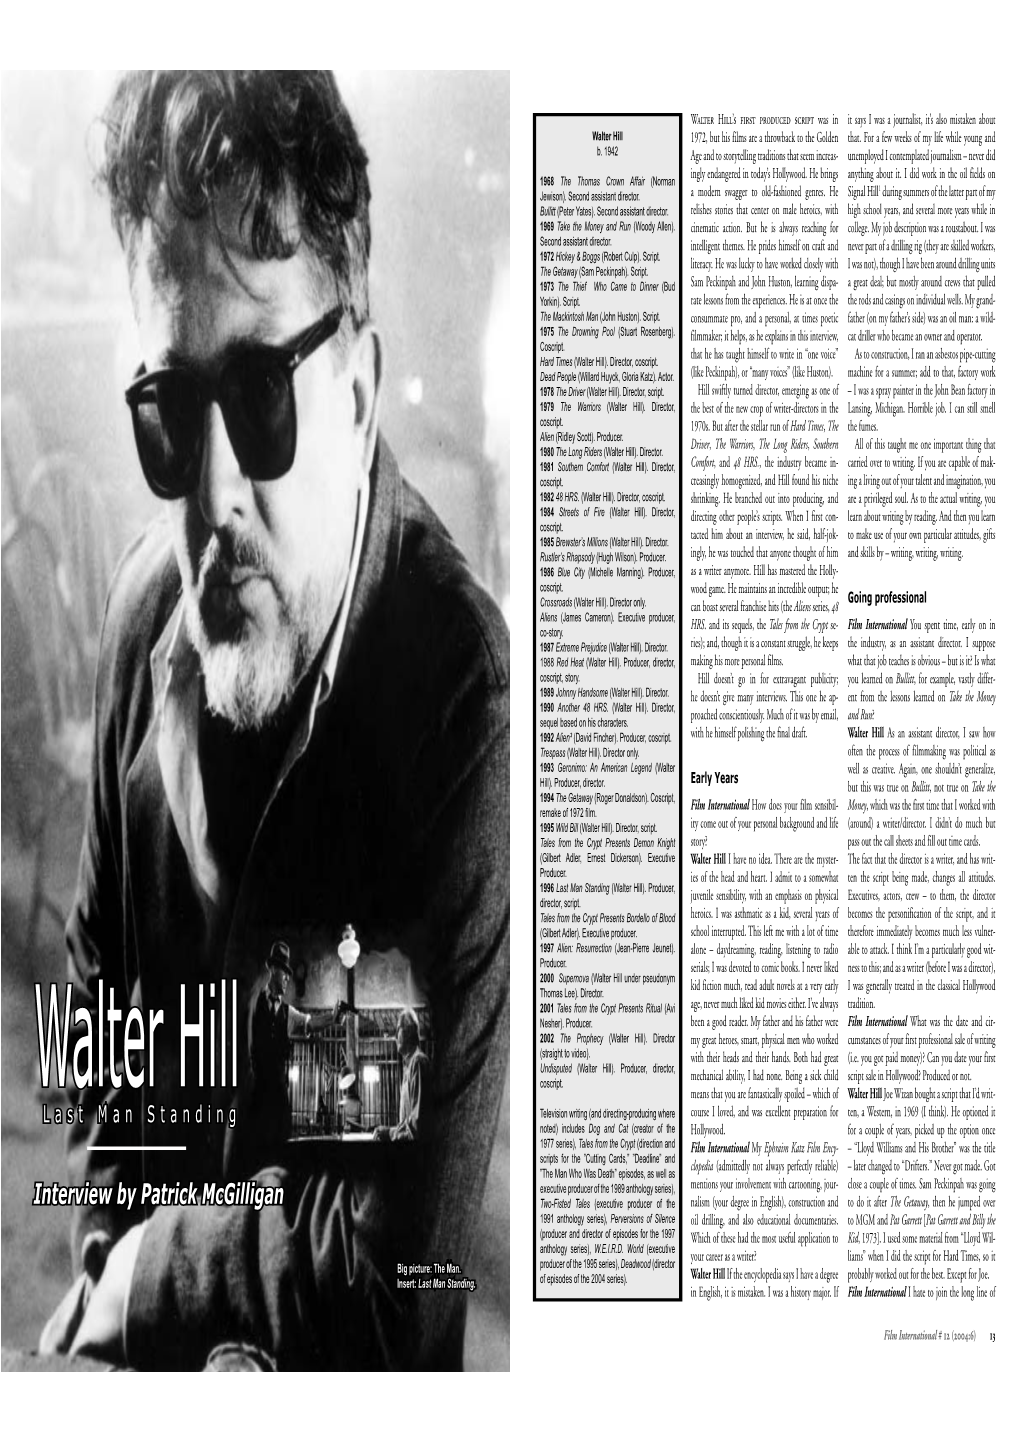 Walter Hill Interview (FI #12)